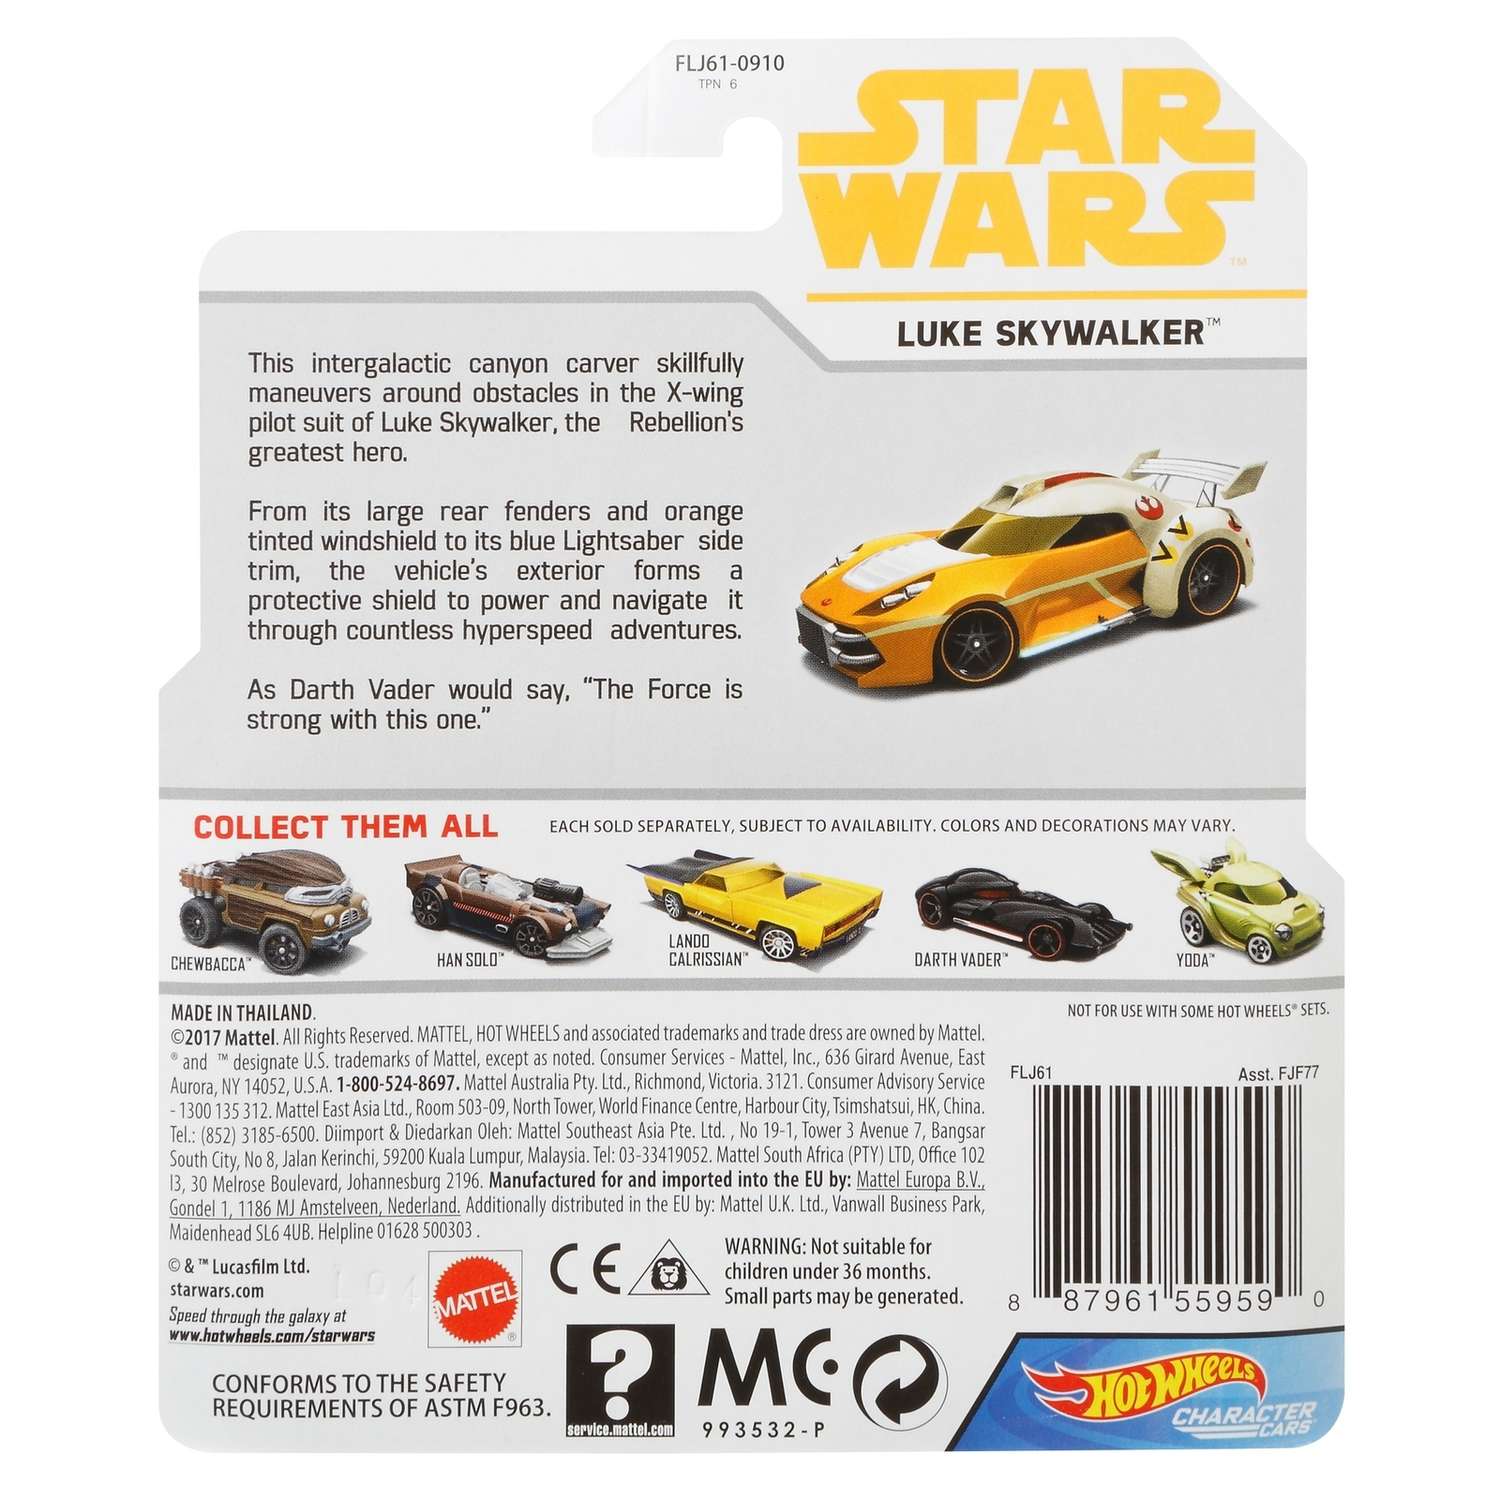 Машинка Hot Wheels Star Wars Люк Скайуокер FLJ61 FJF77 - фото 3